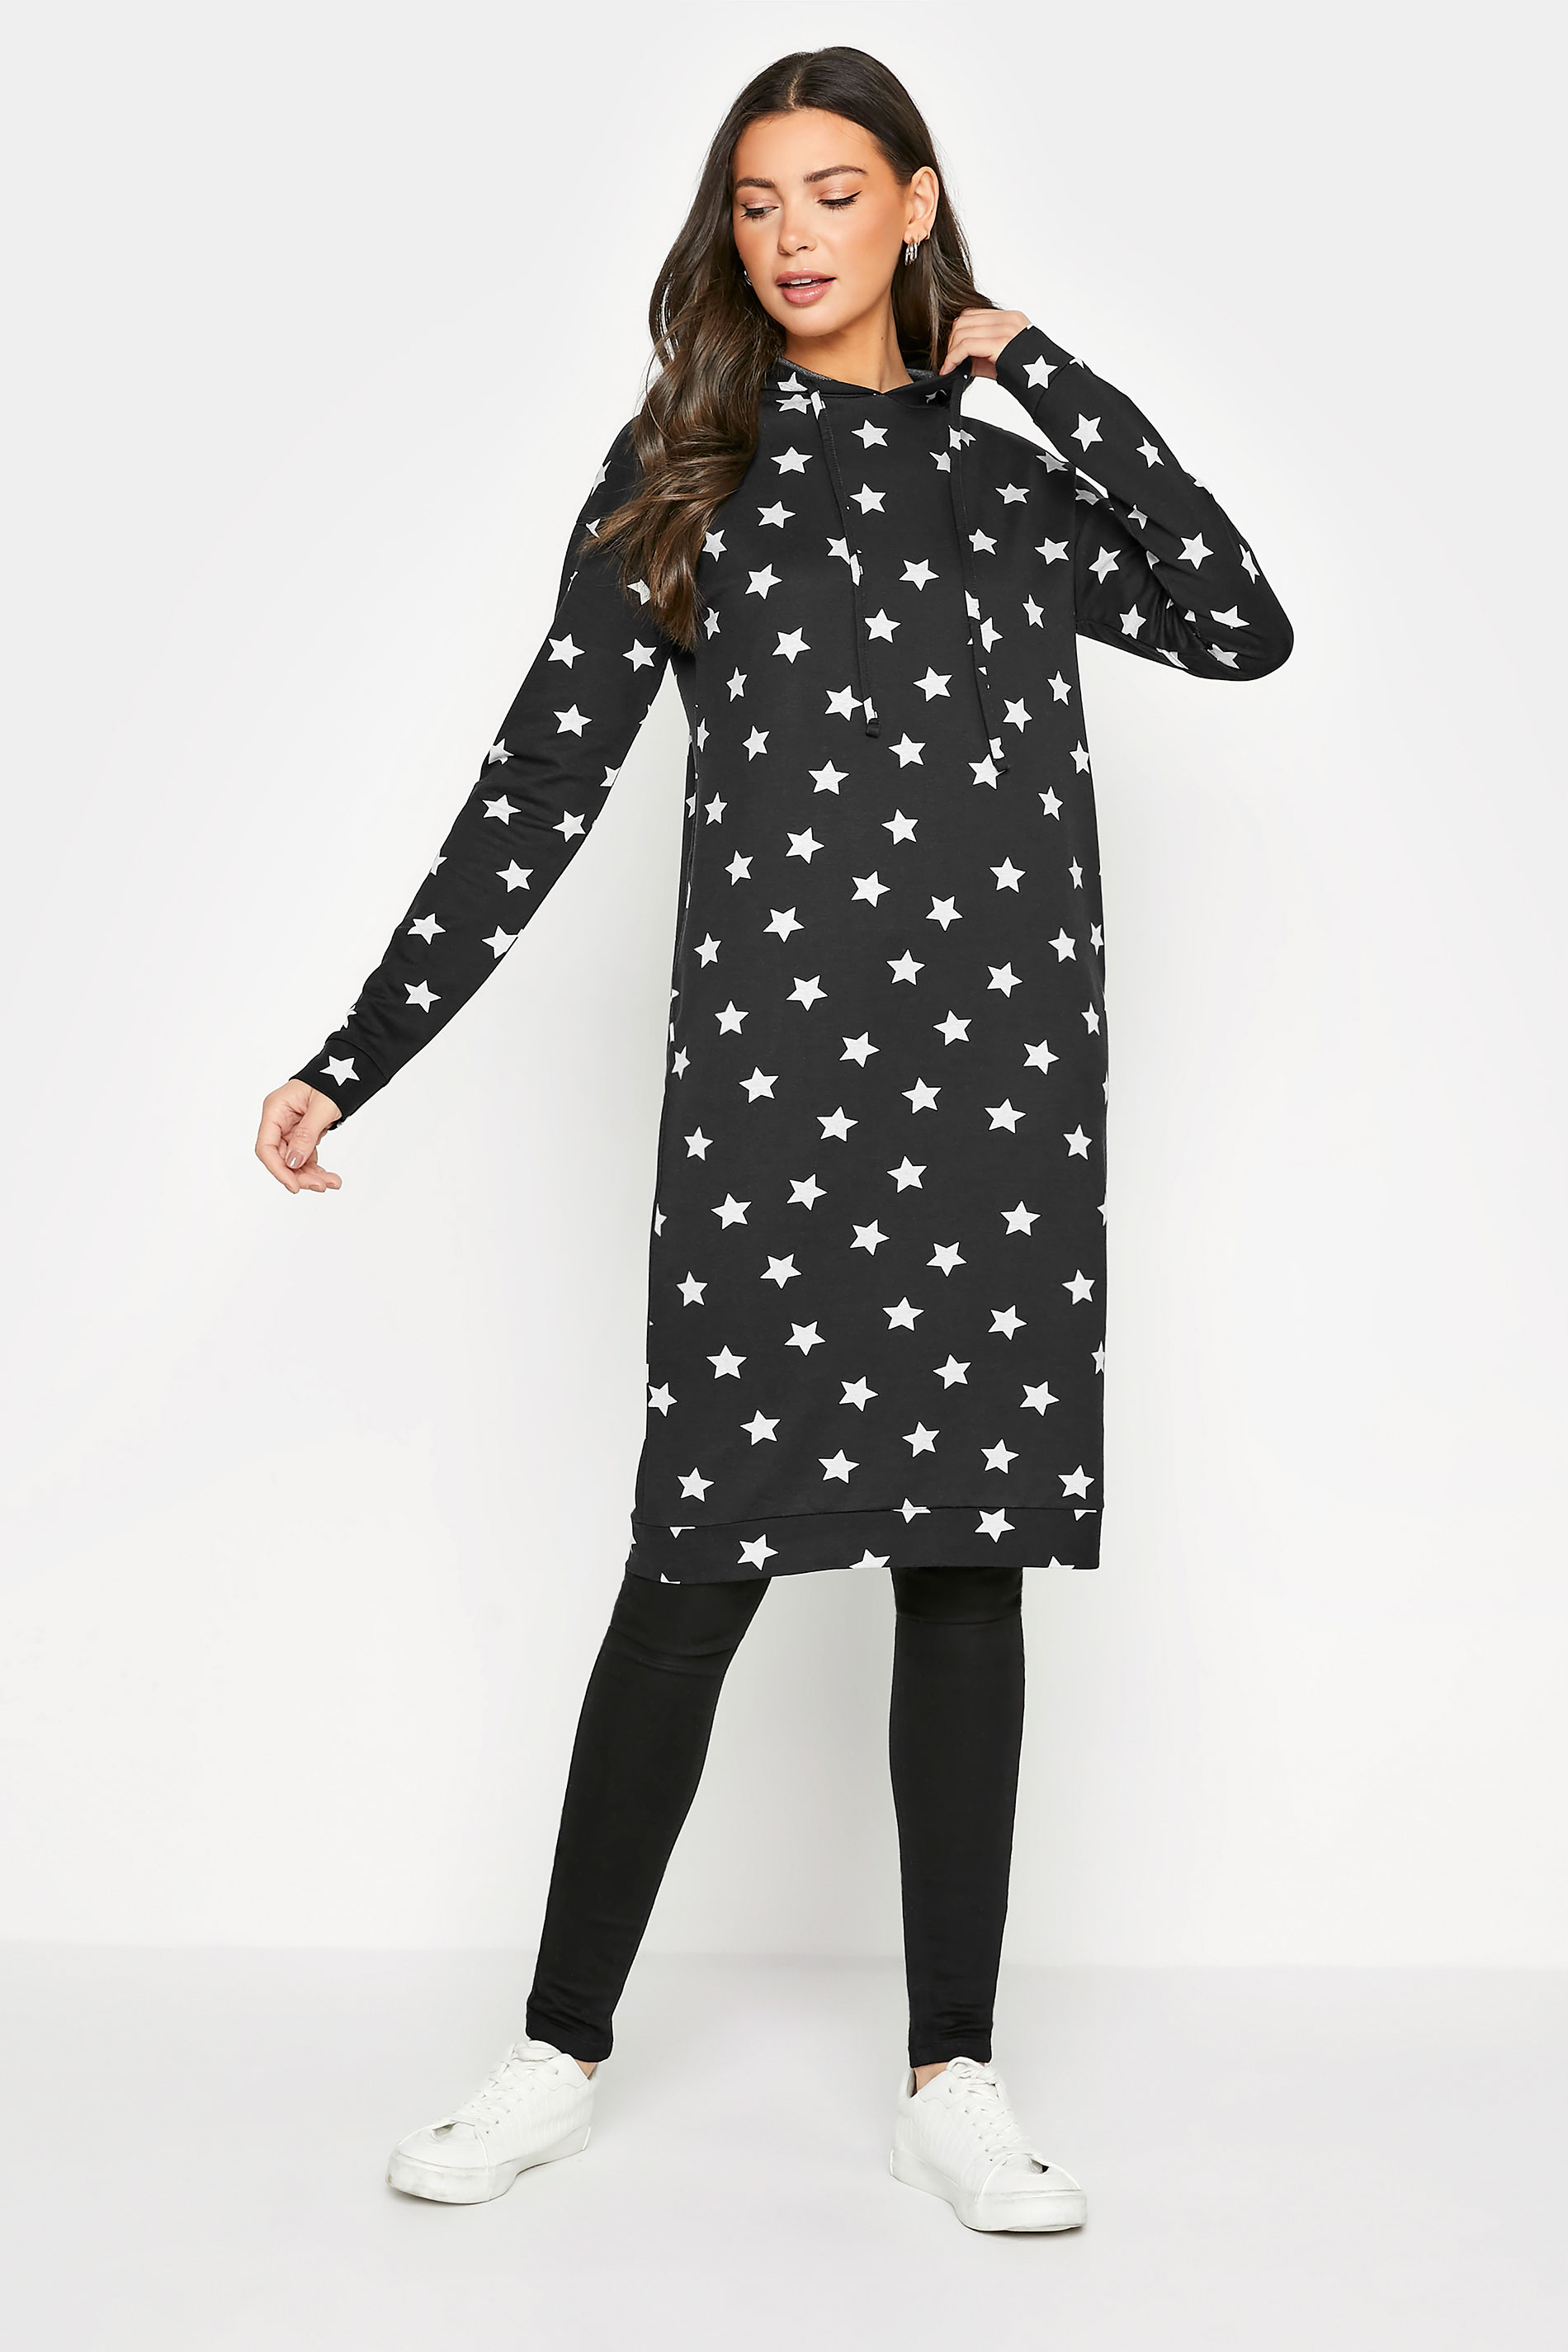 Tall Women's LTS Black Star Print Hoodie Dress | Long Tall Sally 1